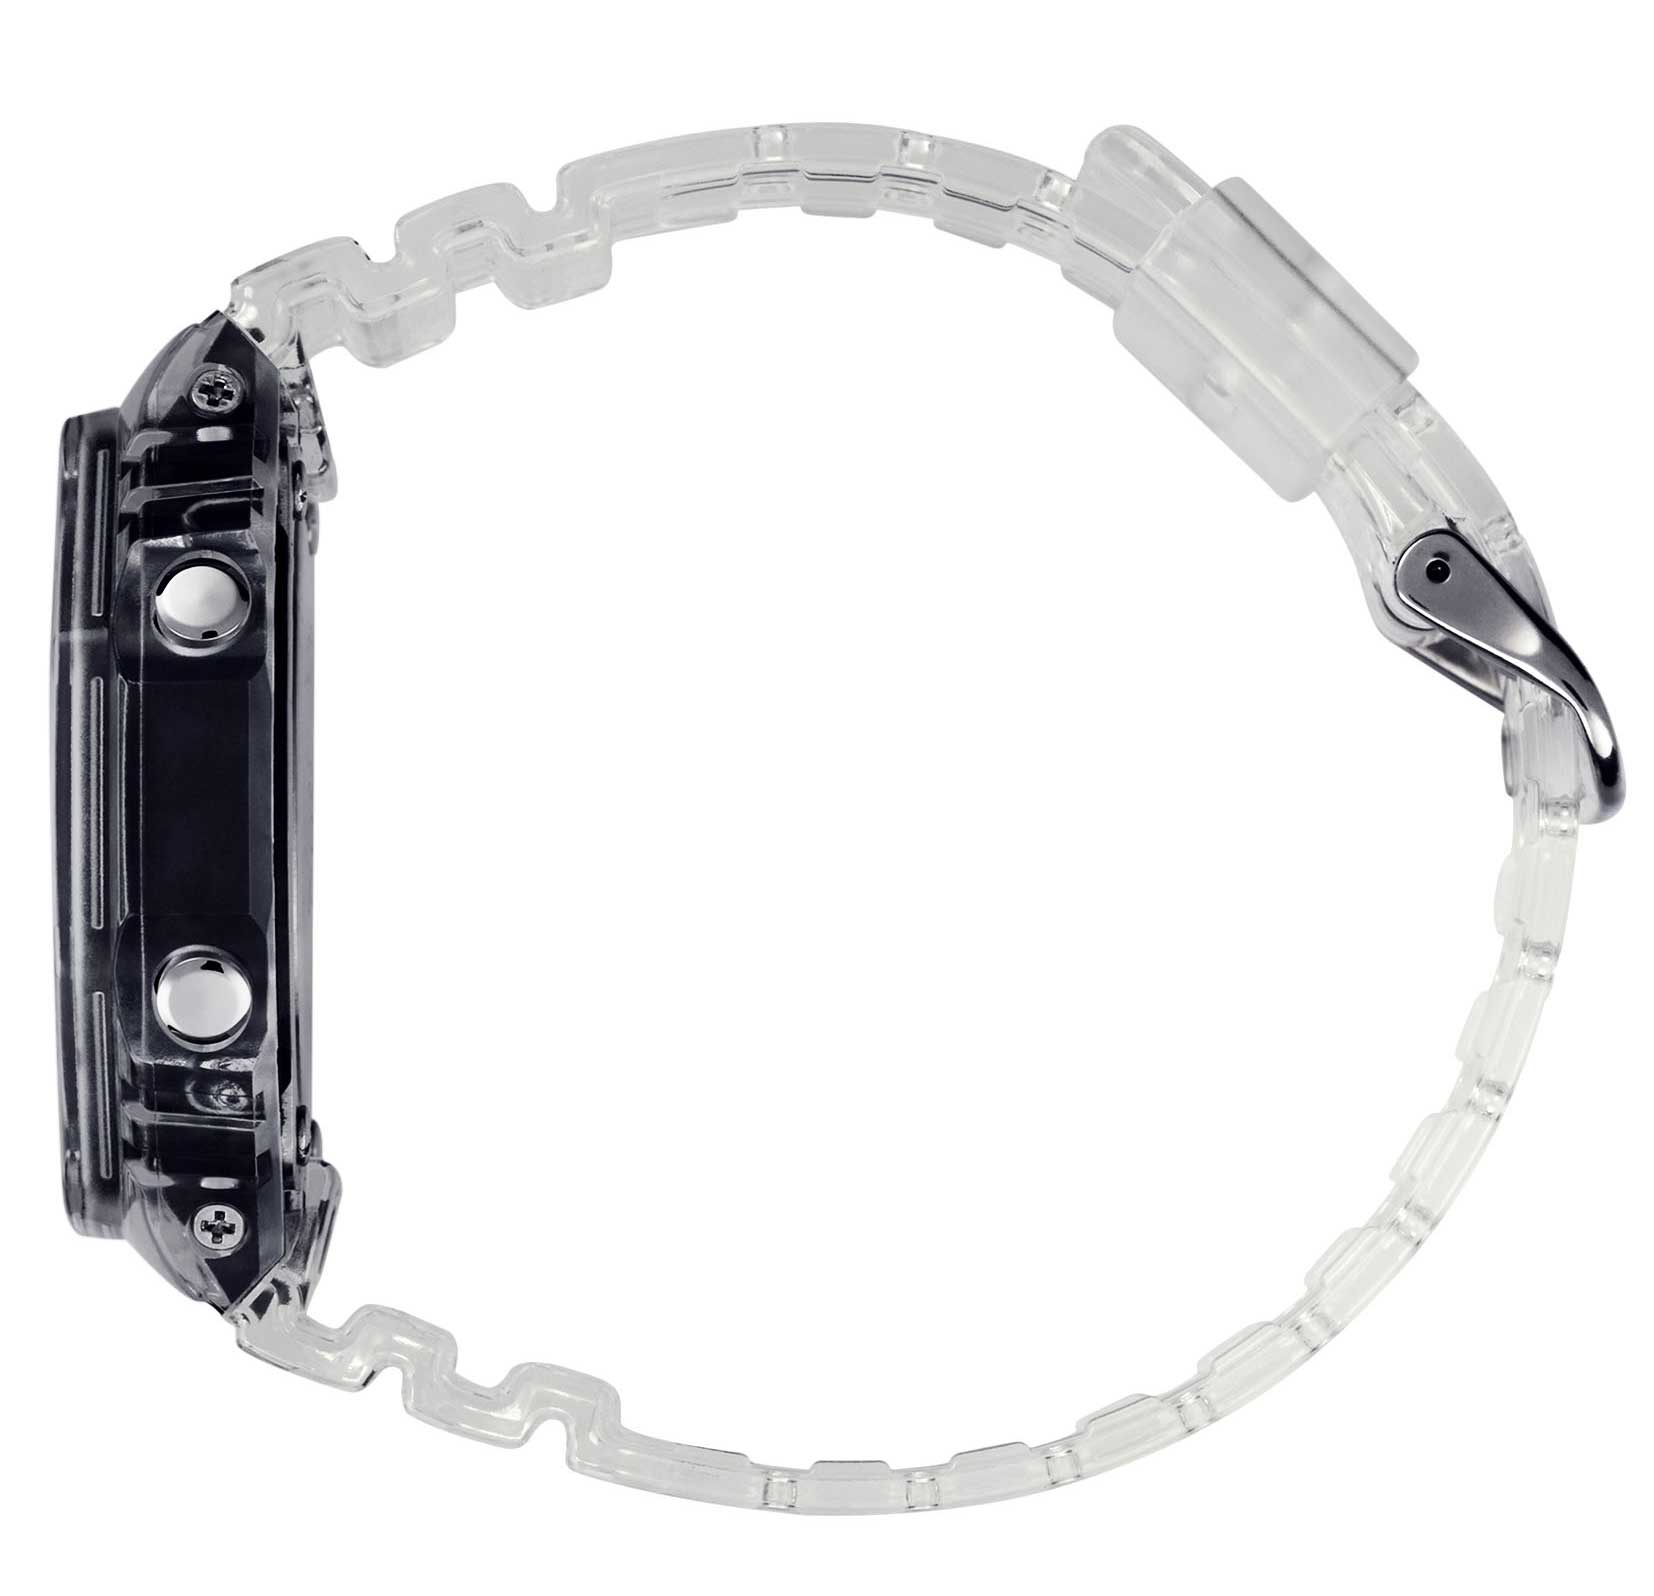 Casio G-Shock Uhr GA-2100SKE-7AER Armbanduhr transparent